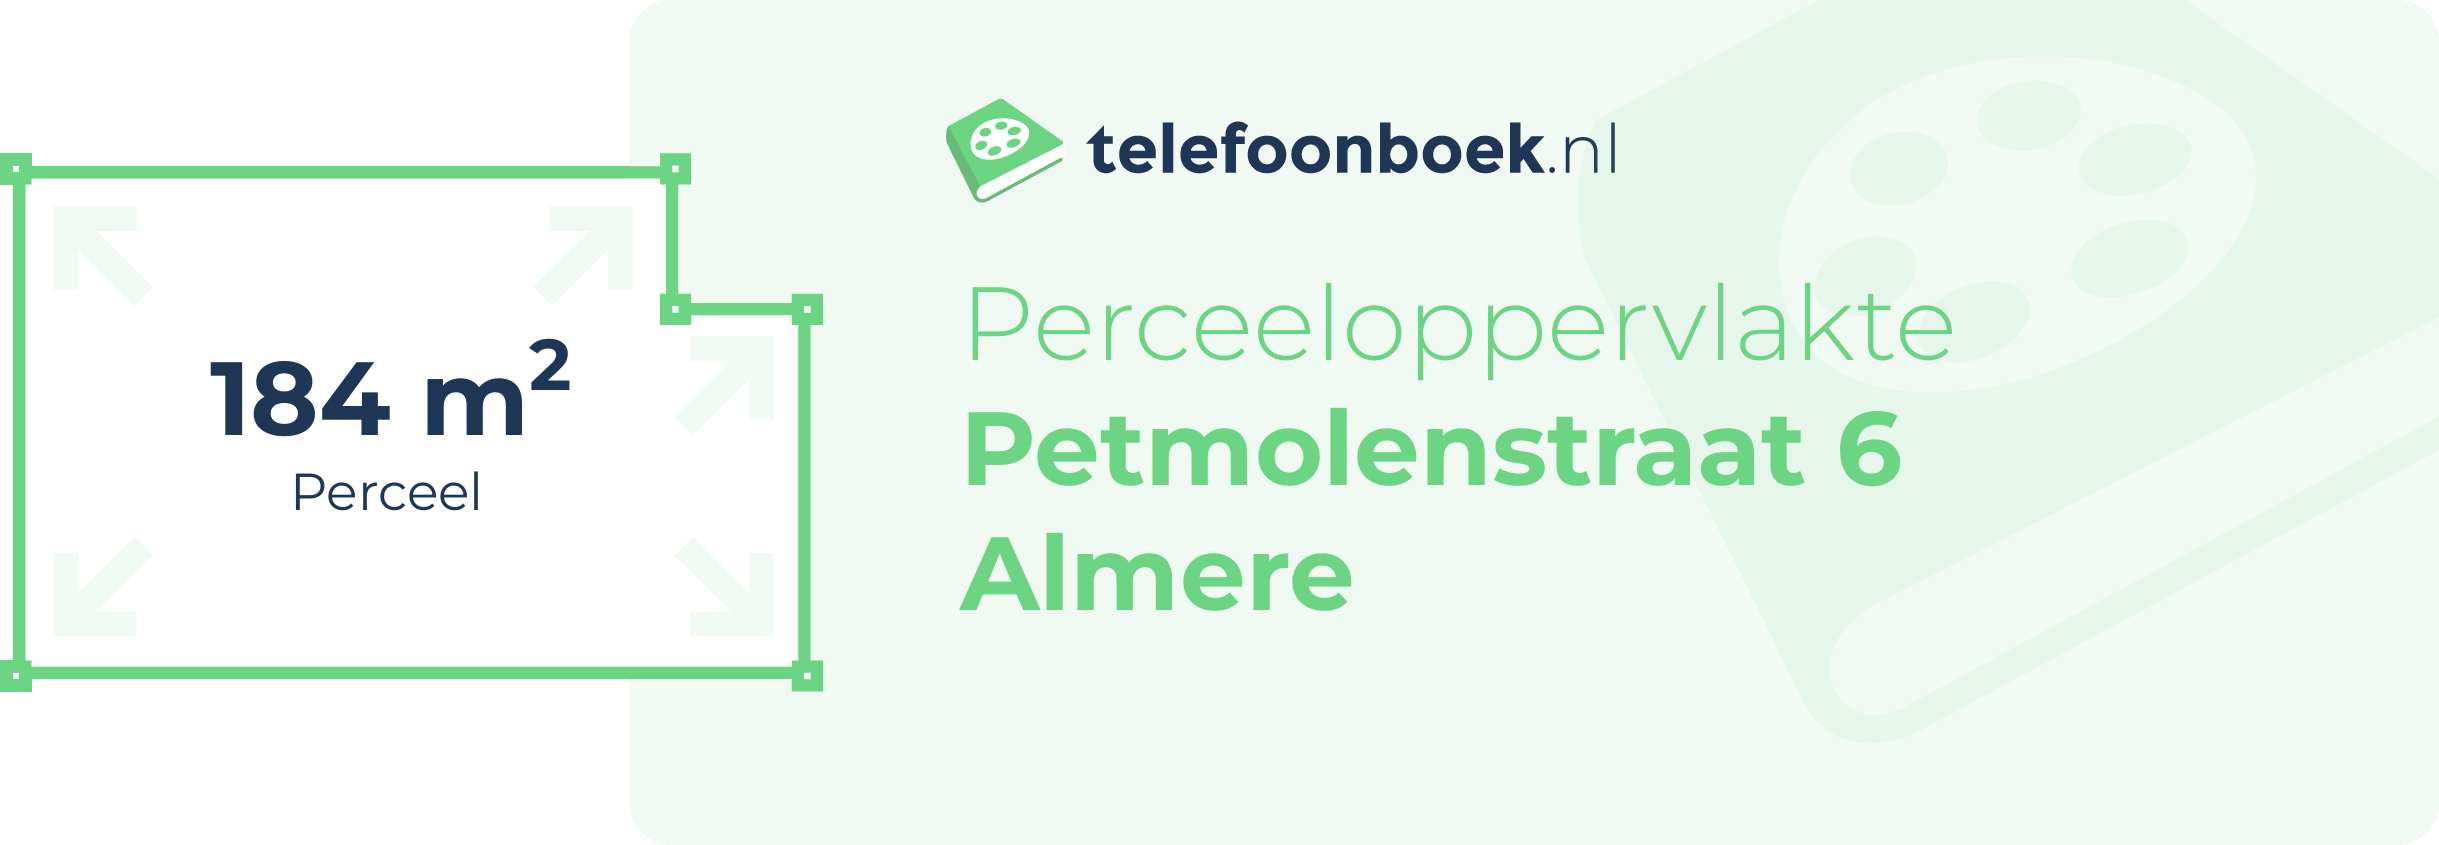 Perceeloppervlakte Petmolenstraat 6 Almere